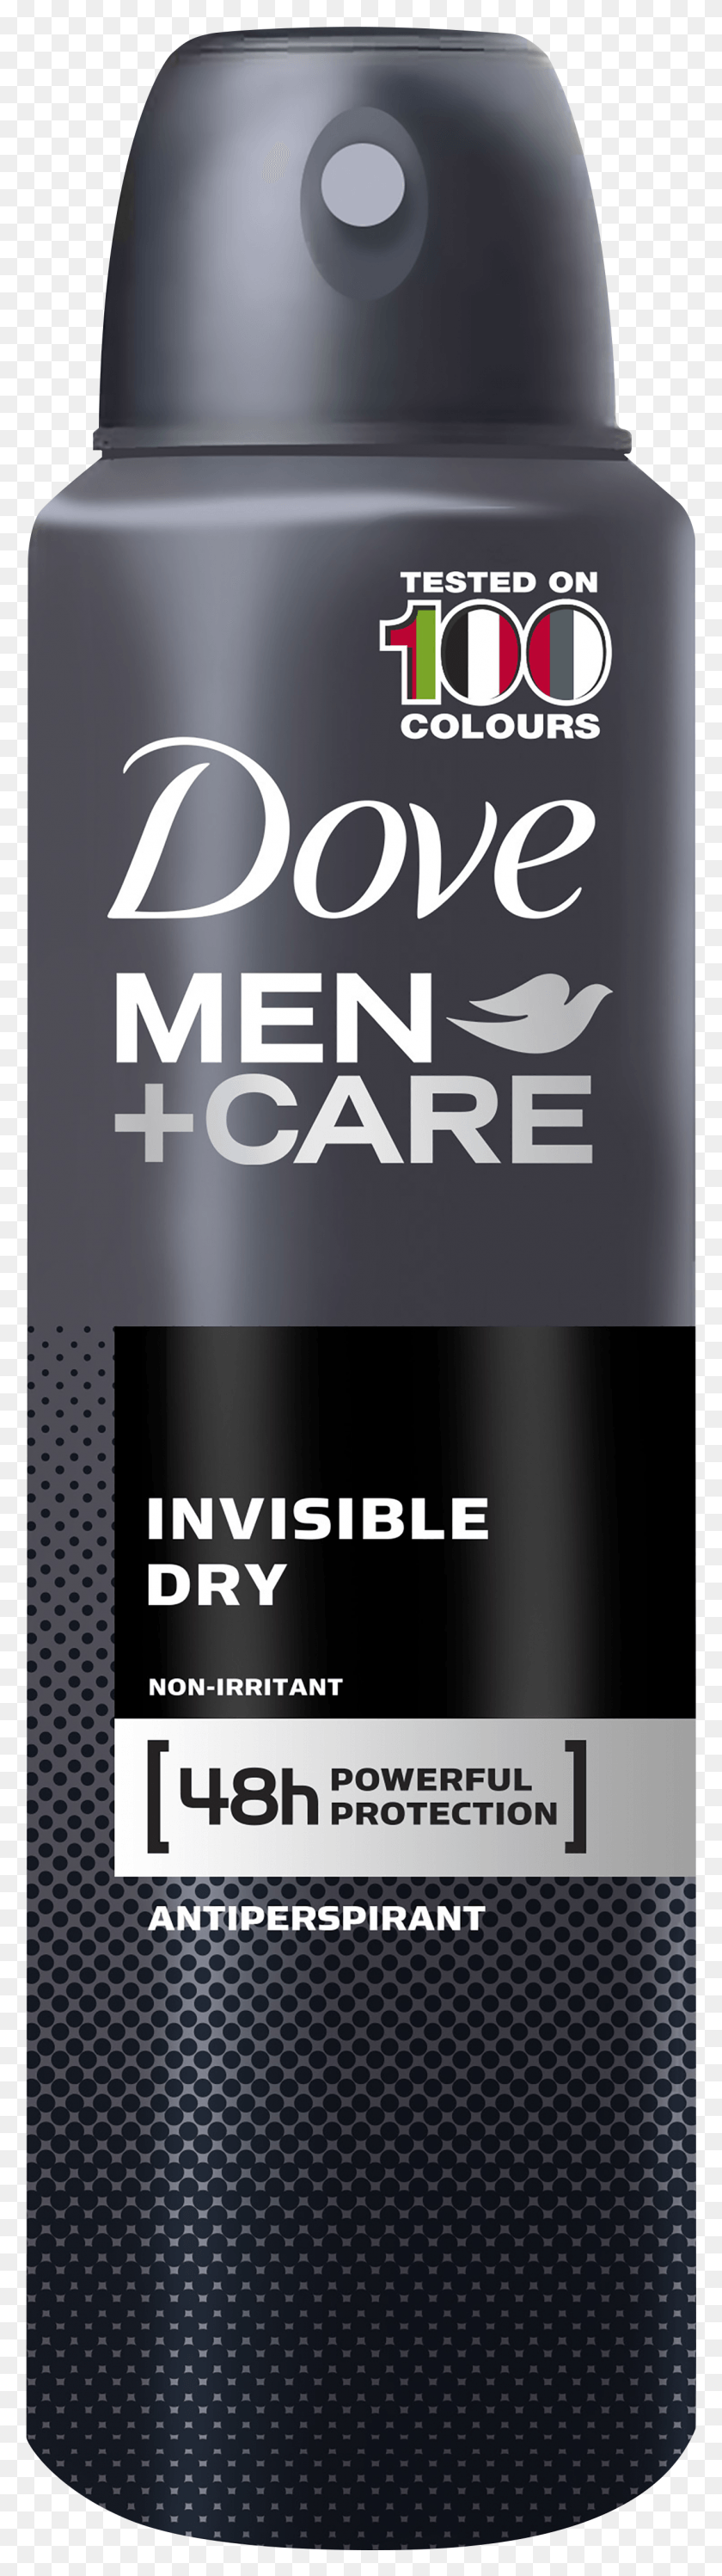 1266x4765 Невидимый Спрей Dove Men Care Invisible Spray, Алюминий, Банка, Олово Hd Png Скачать